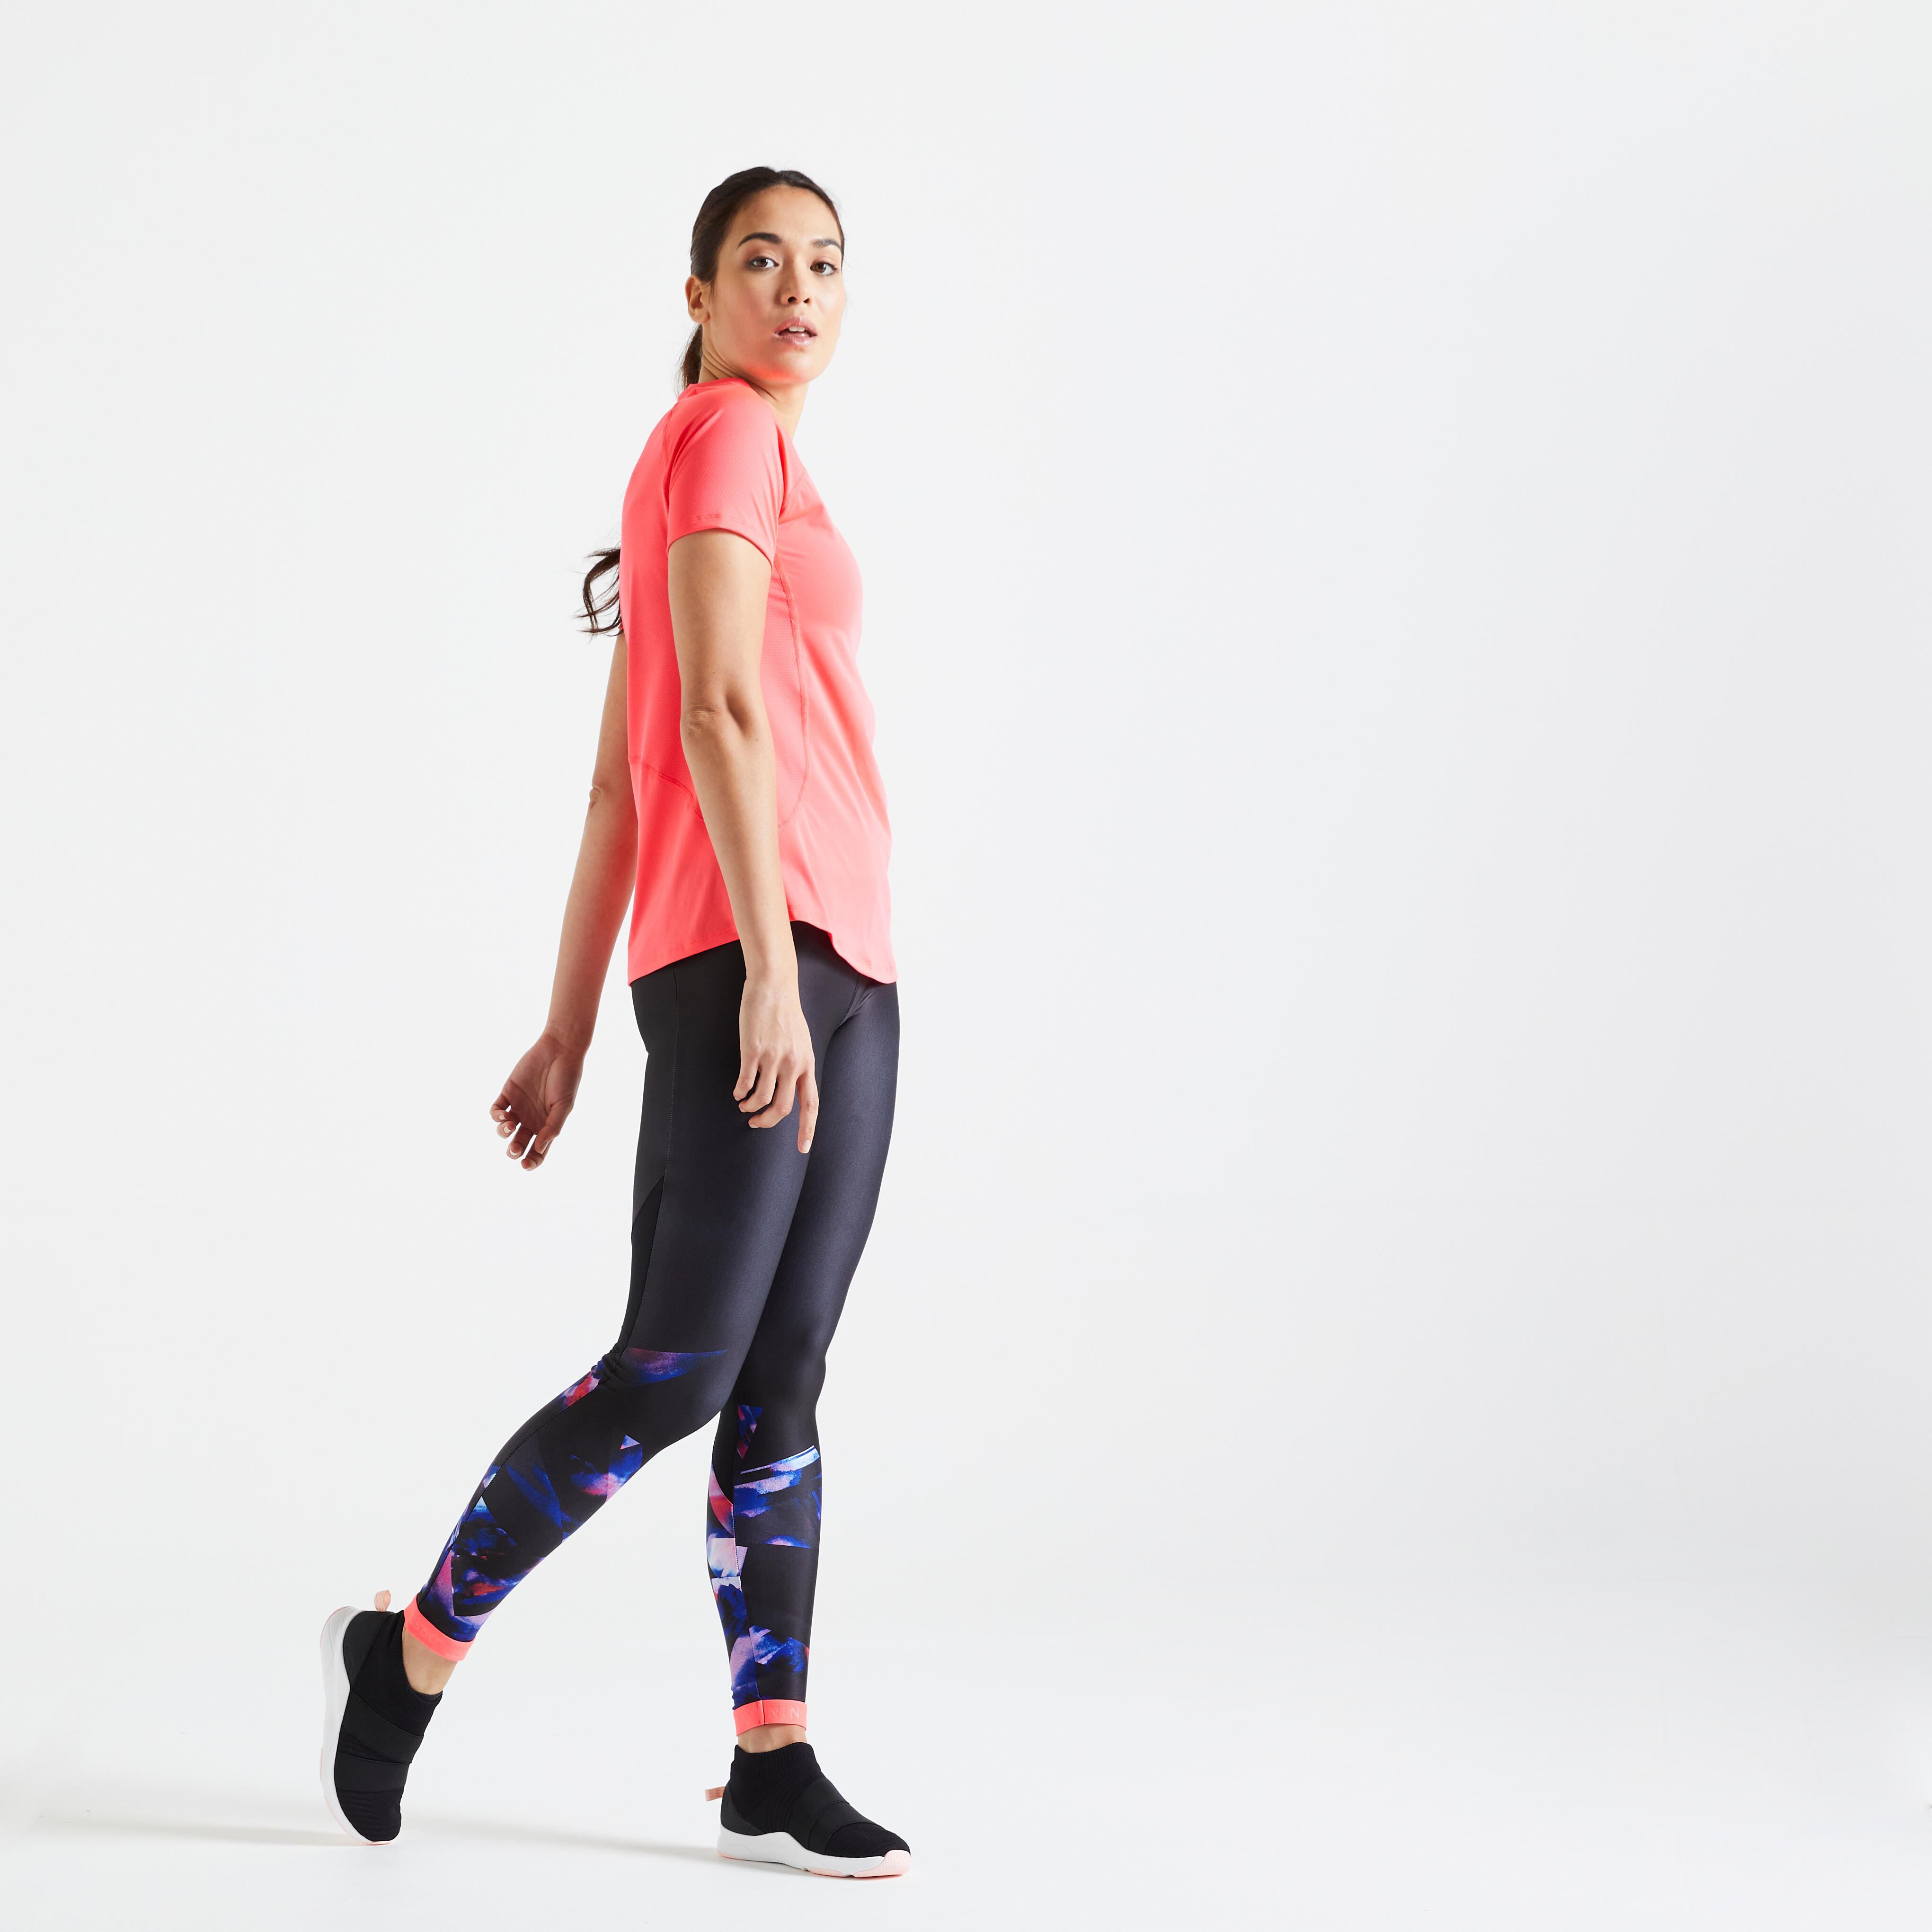 Decathlon - Kimjaly, Seamless 7/8 Yoga Leggings, Women's - Walmart.com